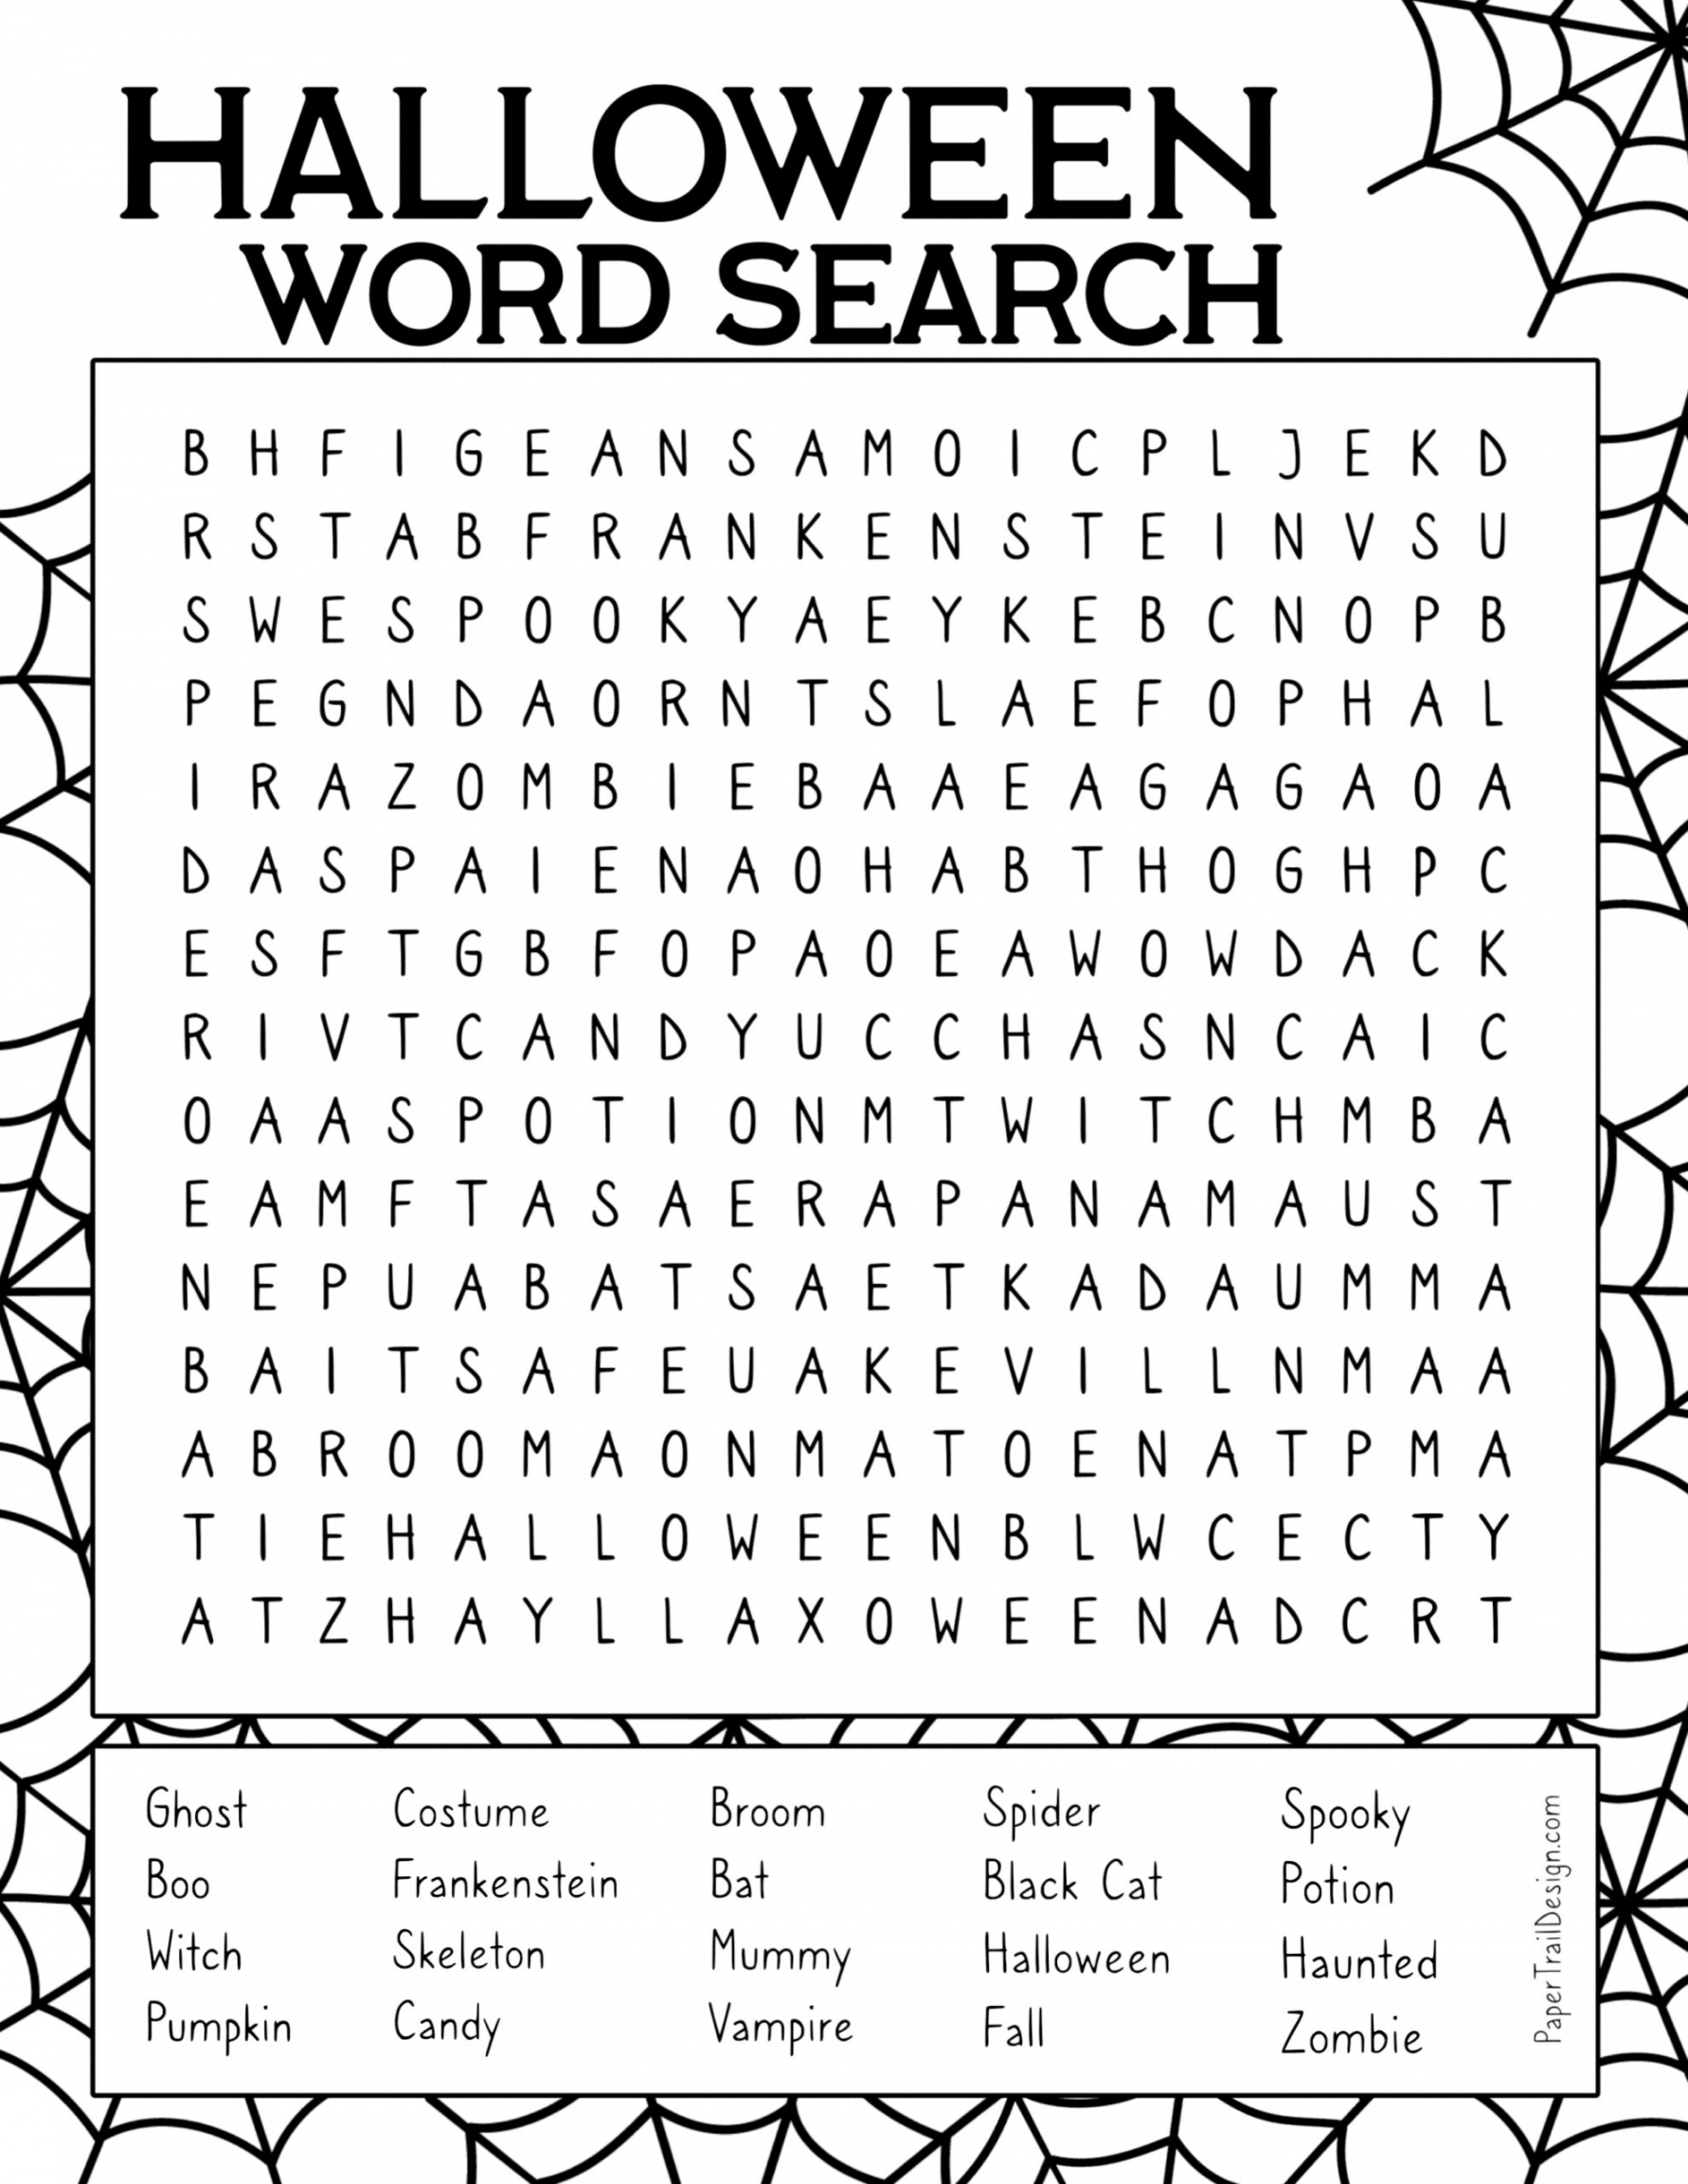 Free Printable Halloween Word Search - Paper Trail Design - FREE Printables - Halloween Word Search Free Printable